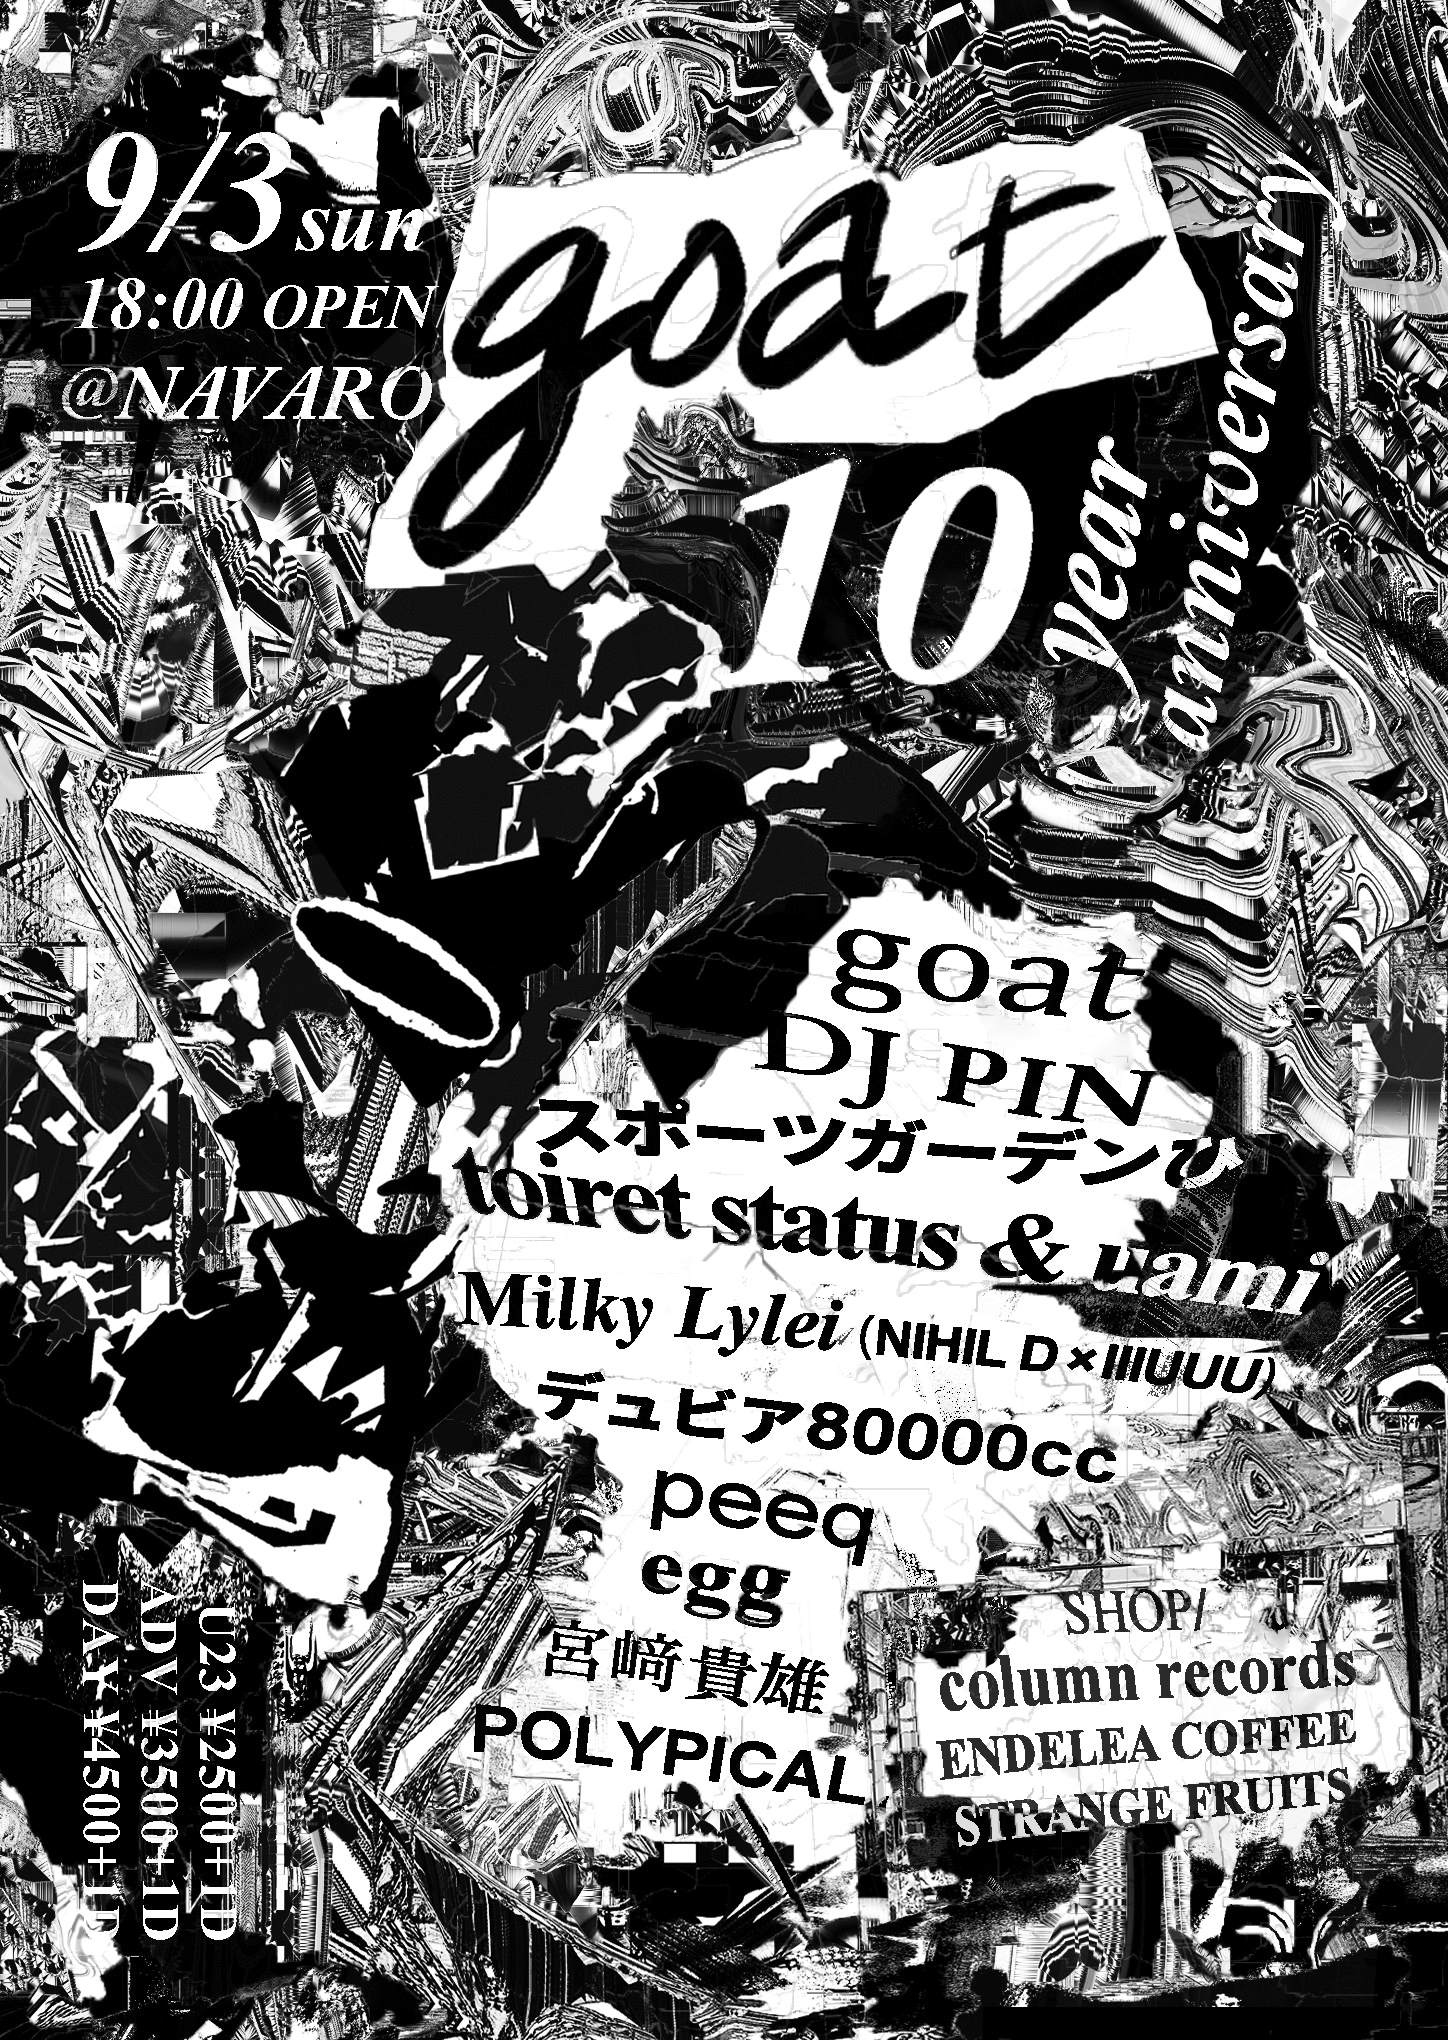 goat 10 year anniversary 熊本公演 - フライヤー表